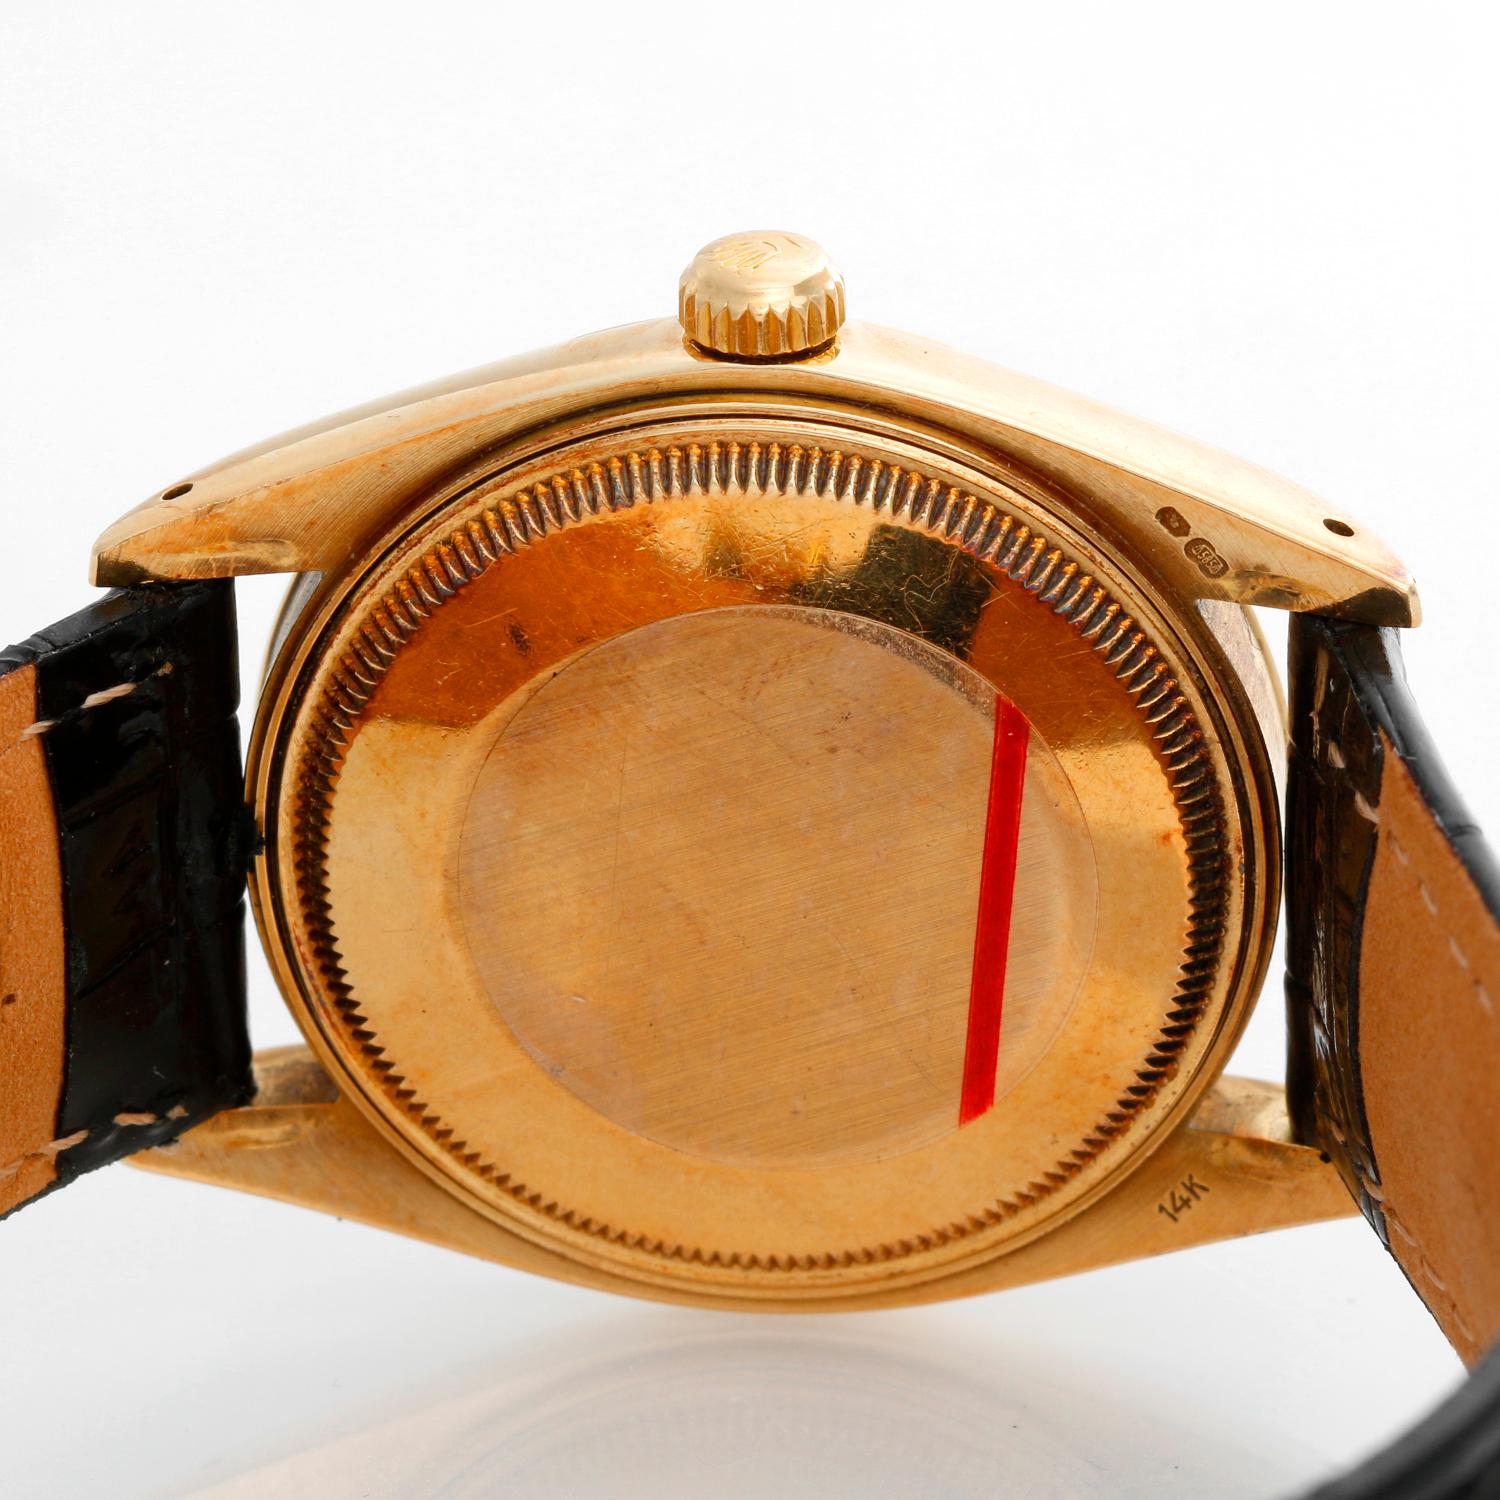 Rolex Date Men's 14 Karat Yellow Gold Watch 1503 1